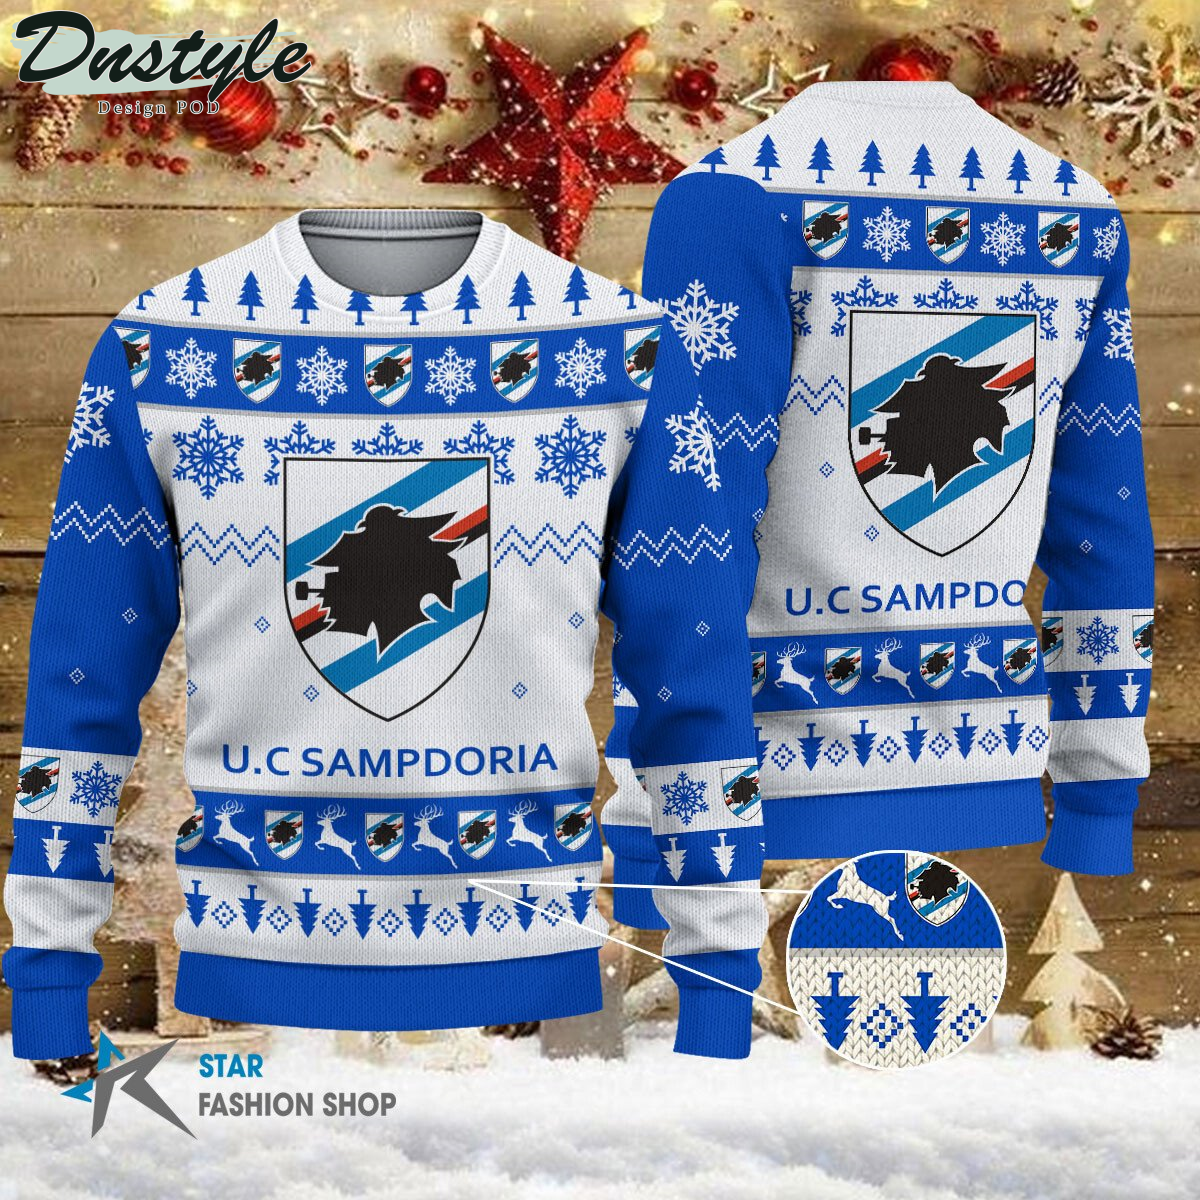 U.C. Sampdoria ugly christmas sweater